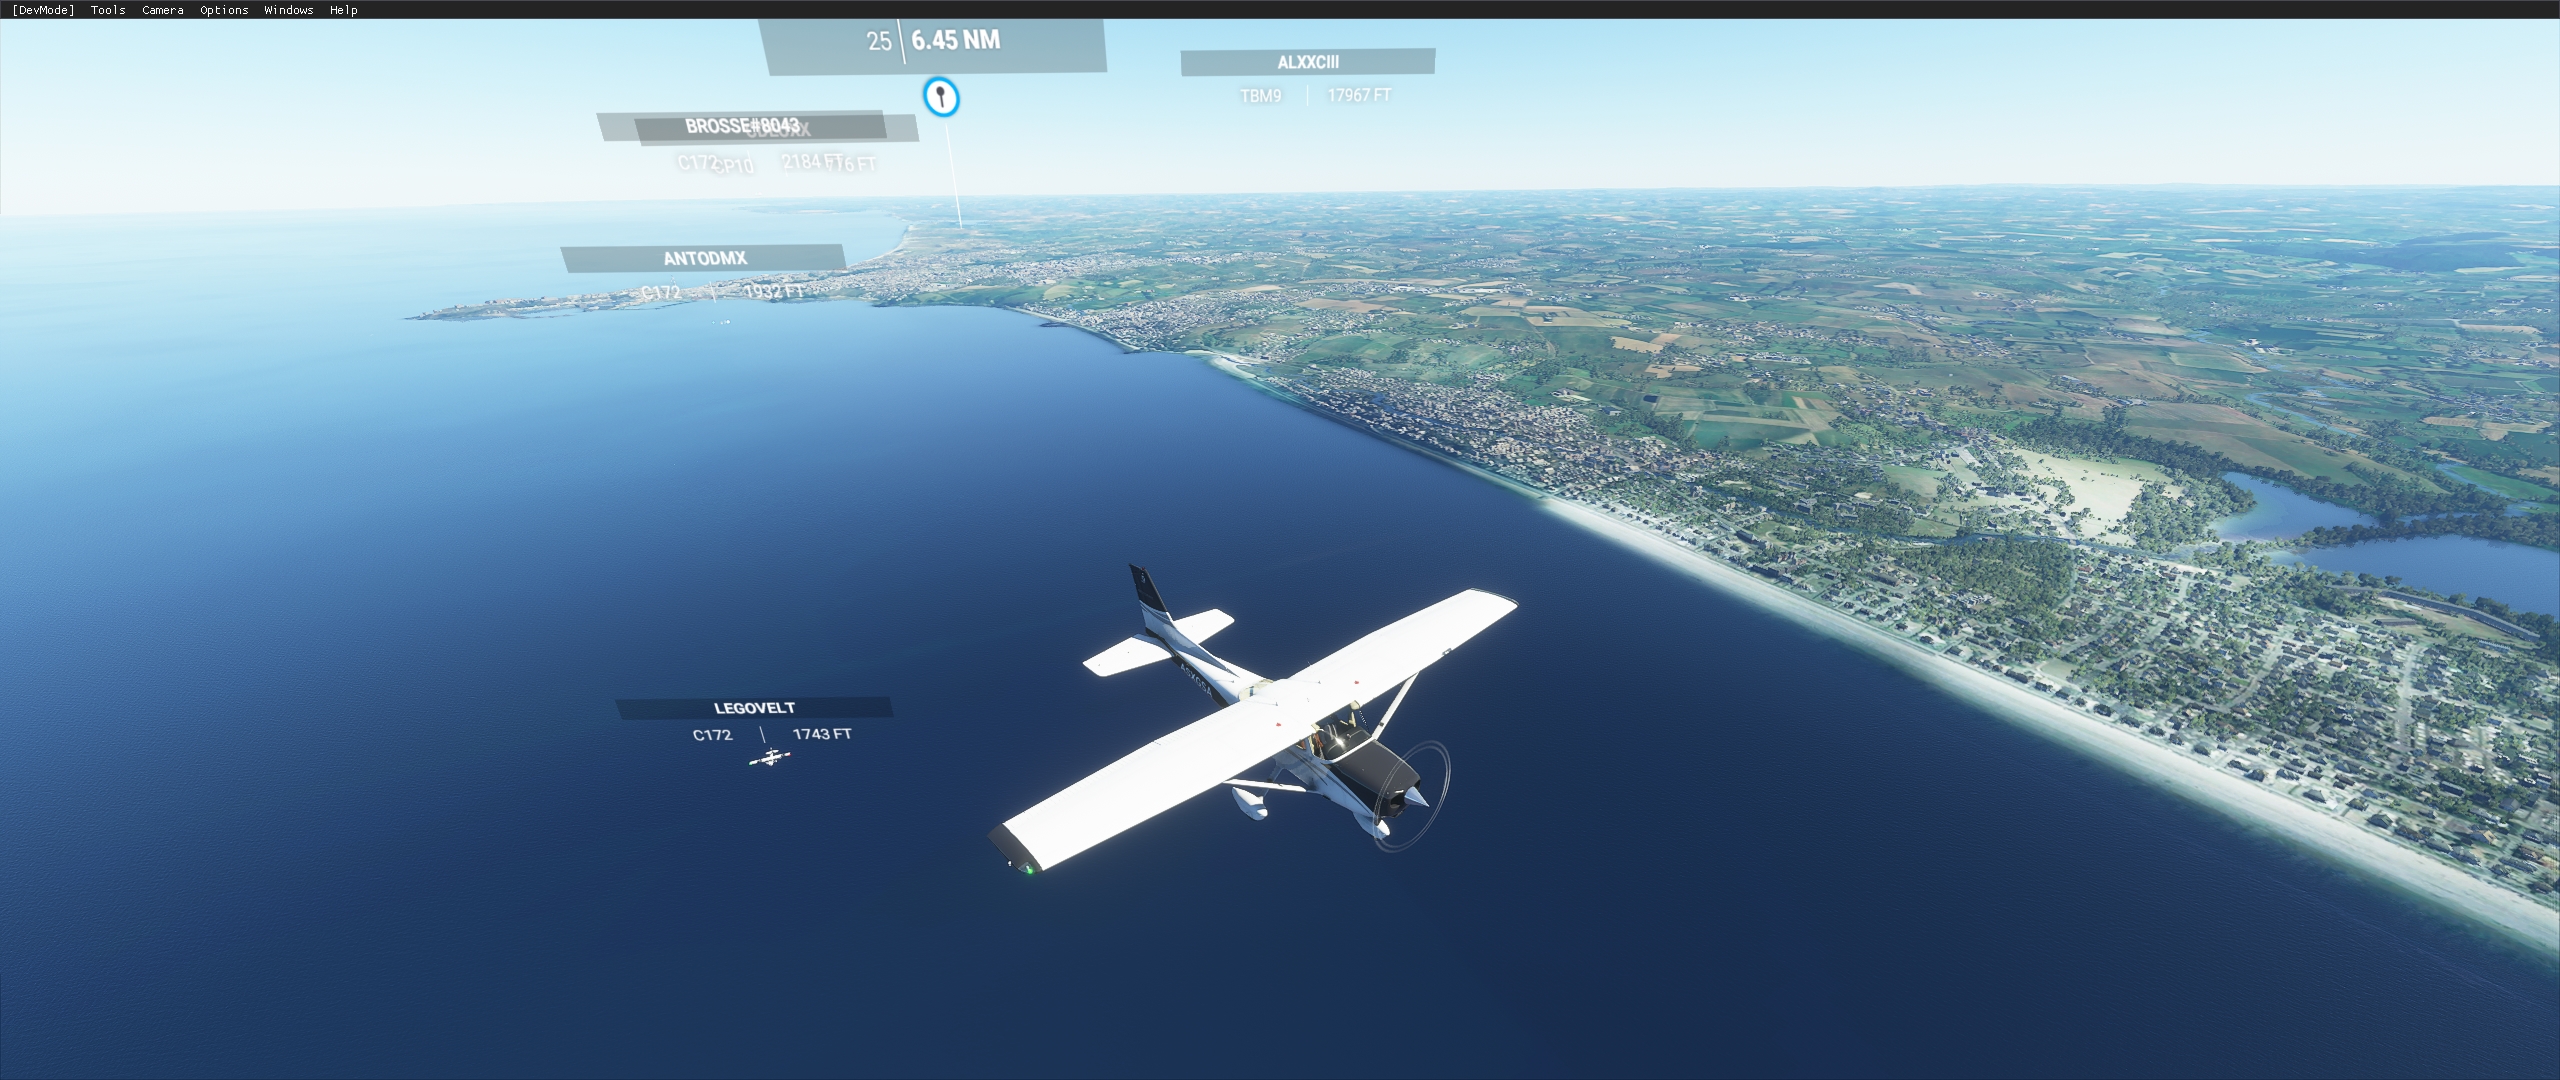 2020-08-27 21_18_33-Microsoft Flight Simulator - 1.7.12.0.jpg